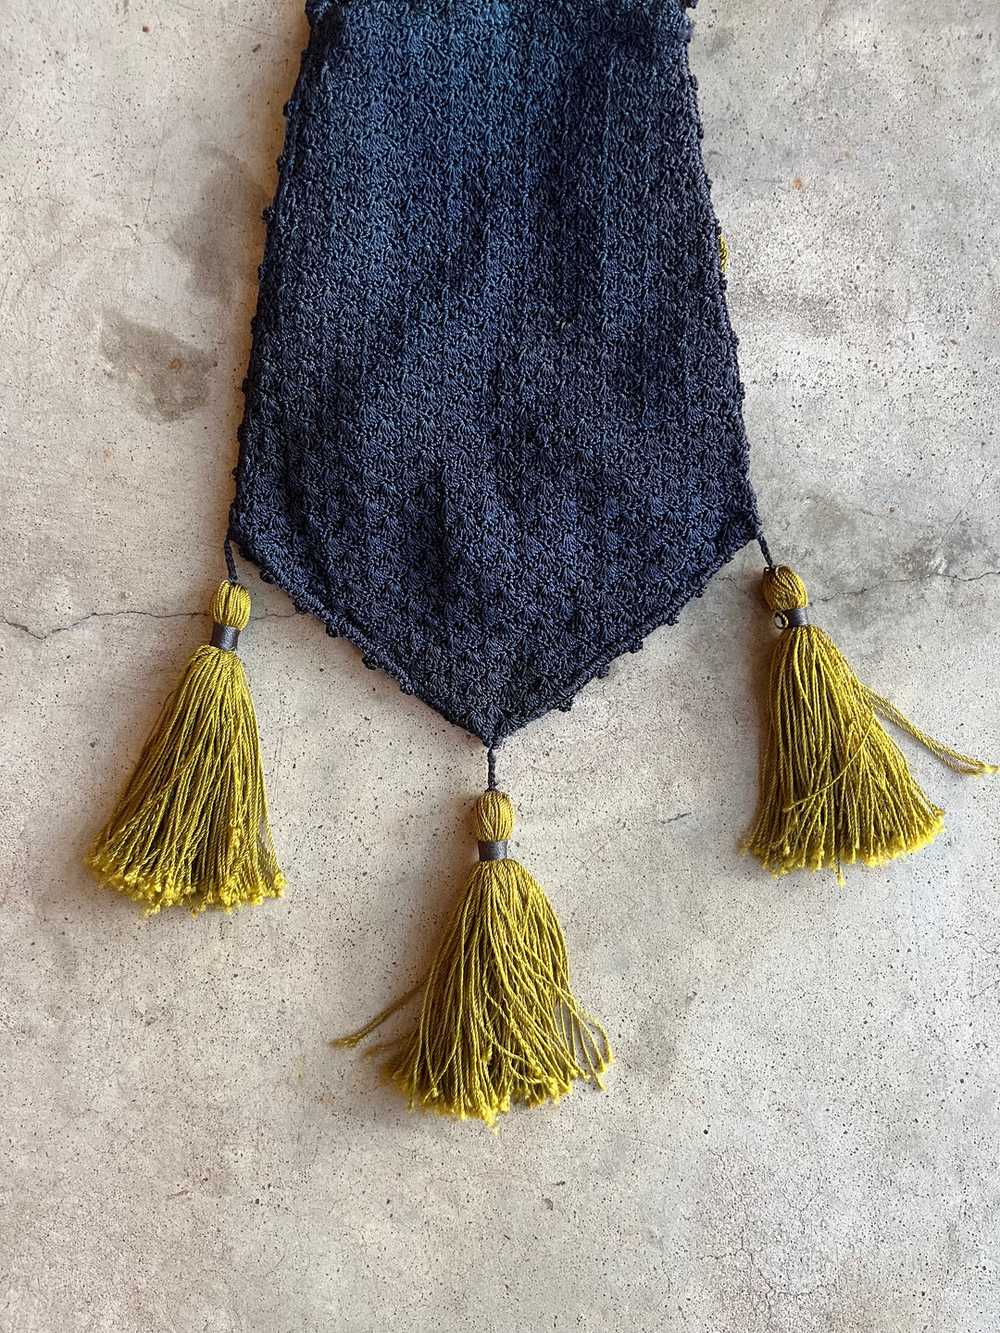 c. 1910s-1920s Crochet Purse - image 6